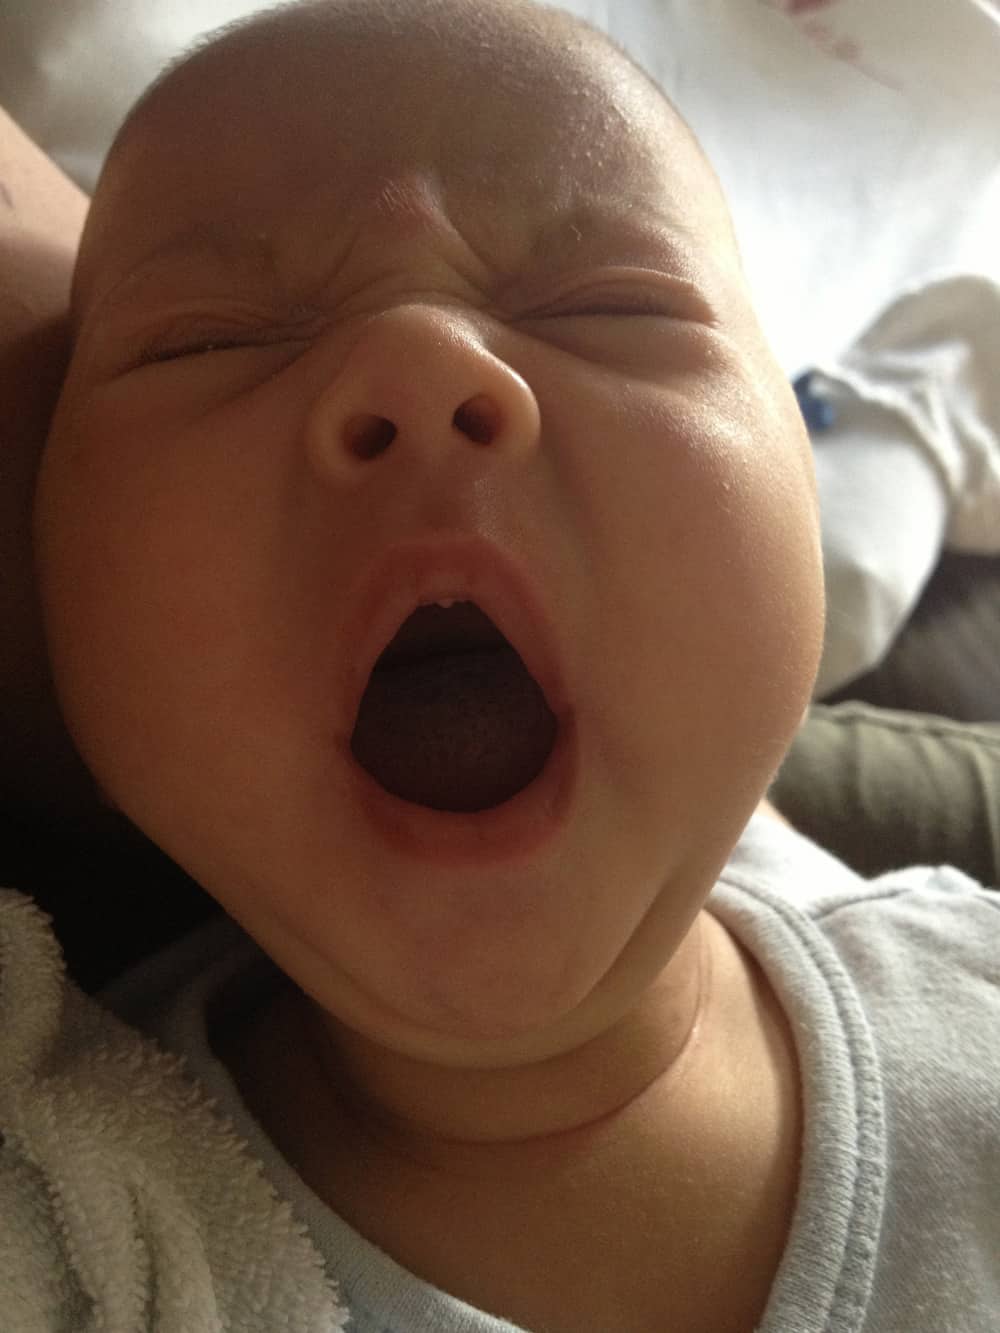 Newborn baby yawning